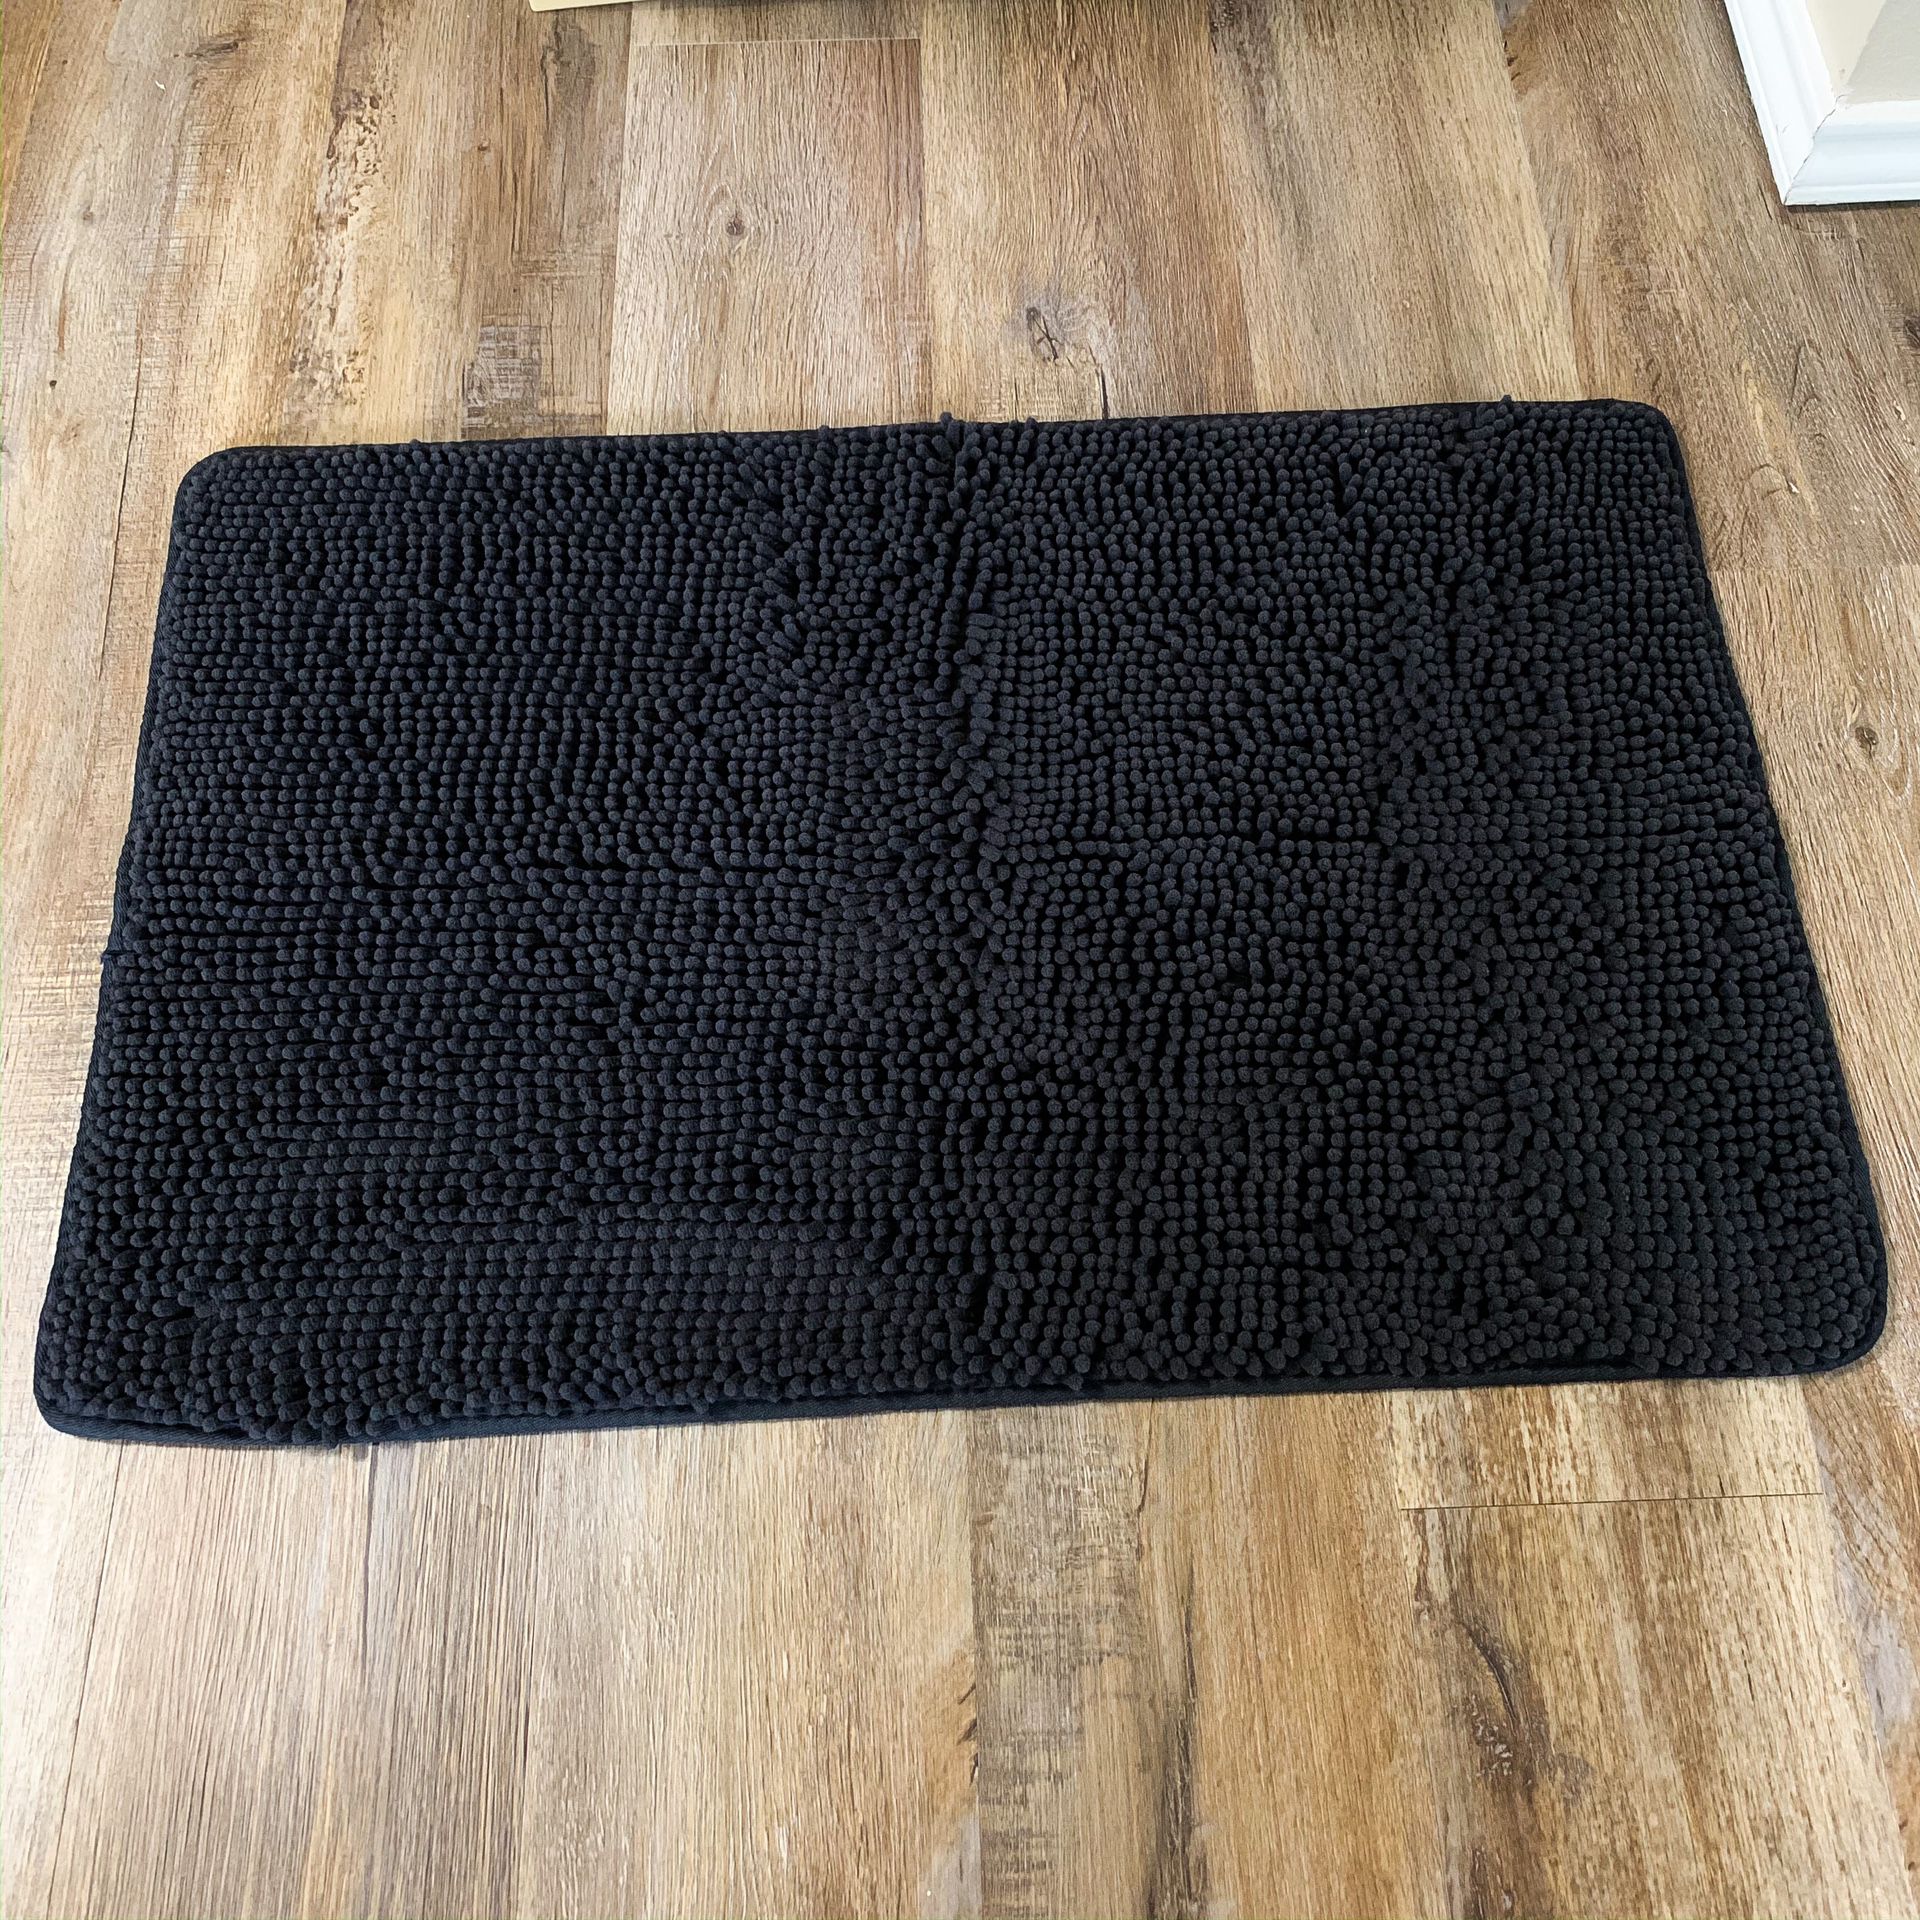 NEW soft black rug for bathroom